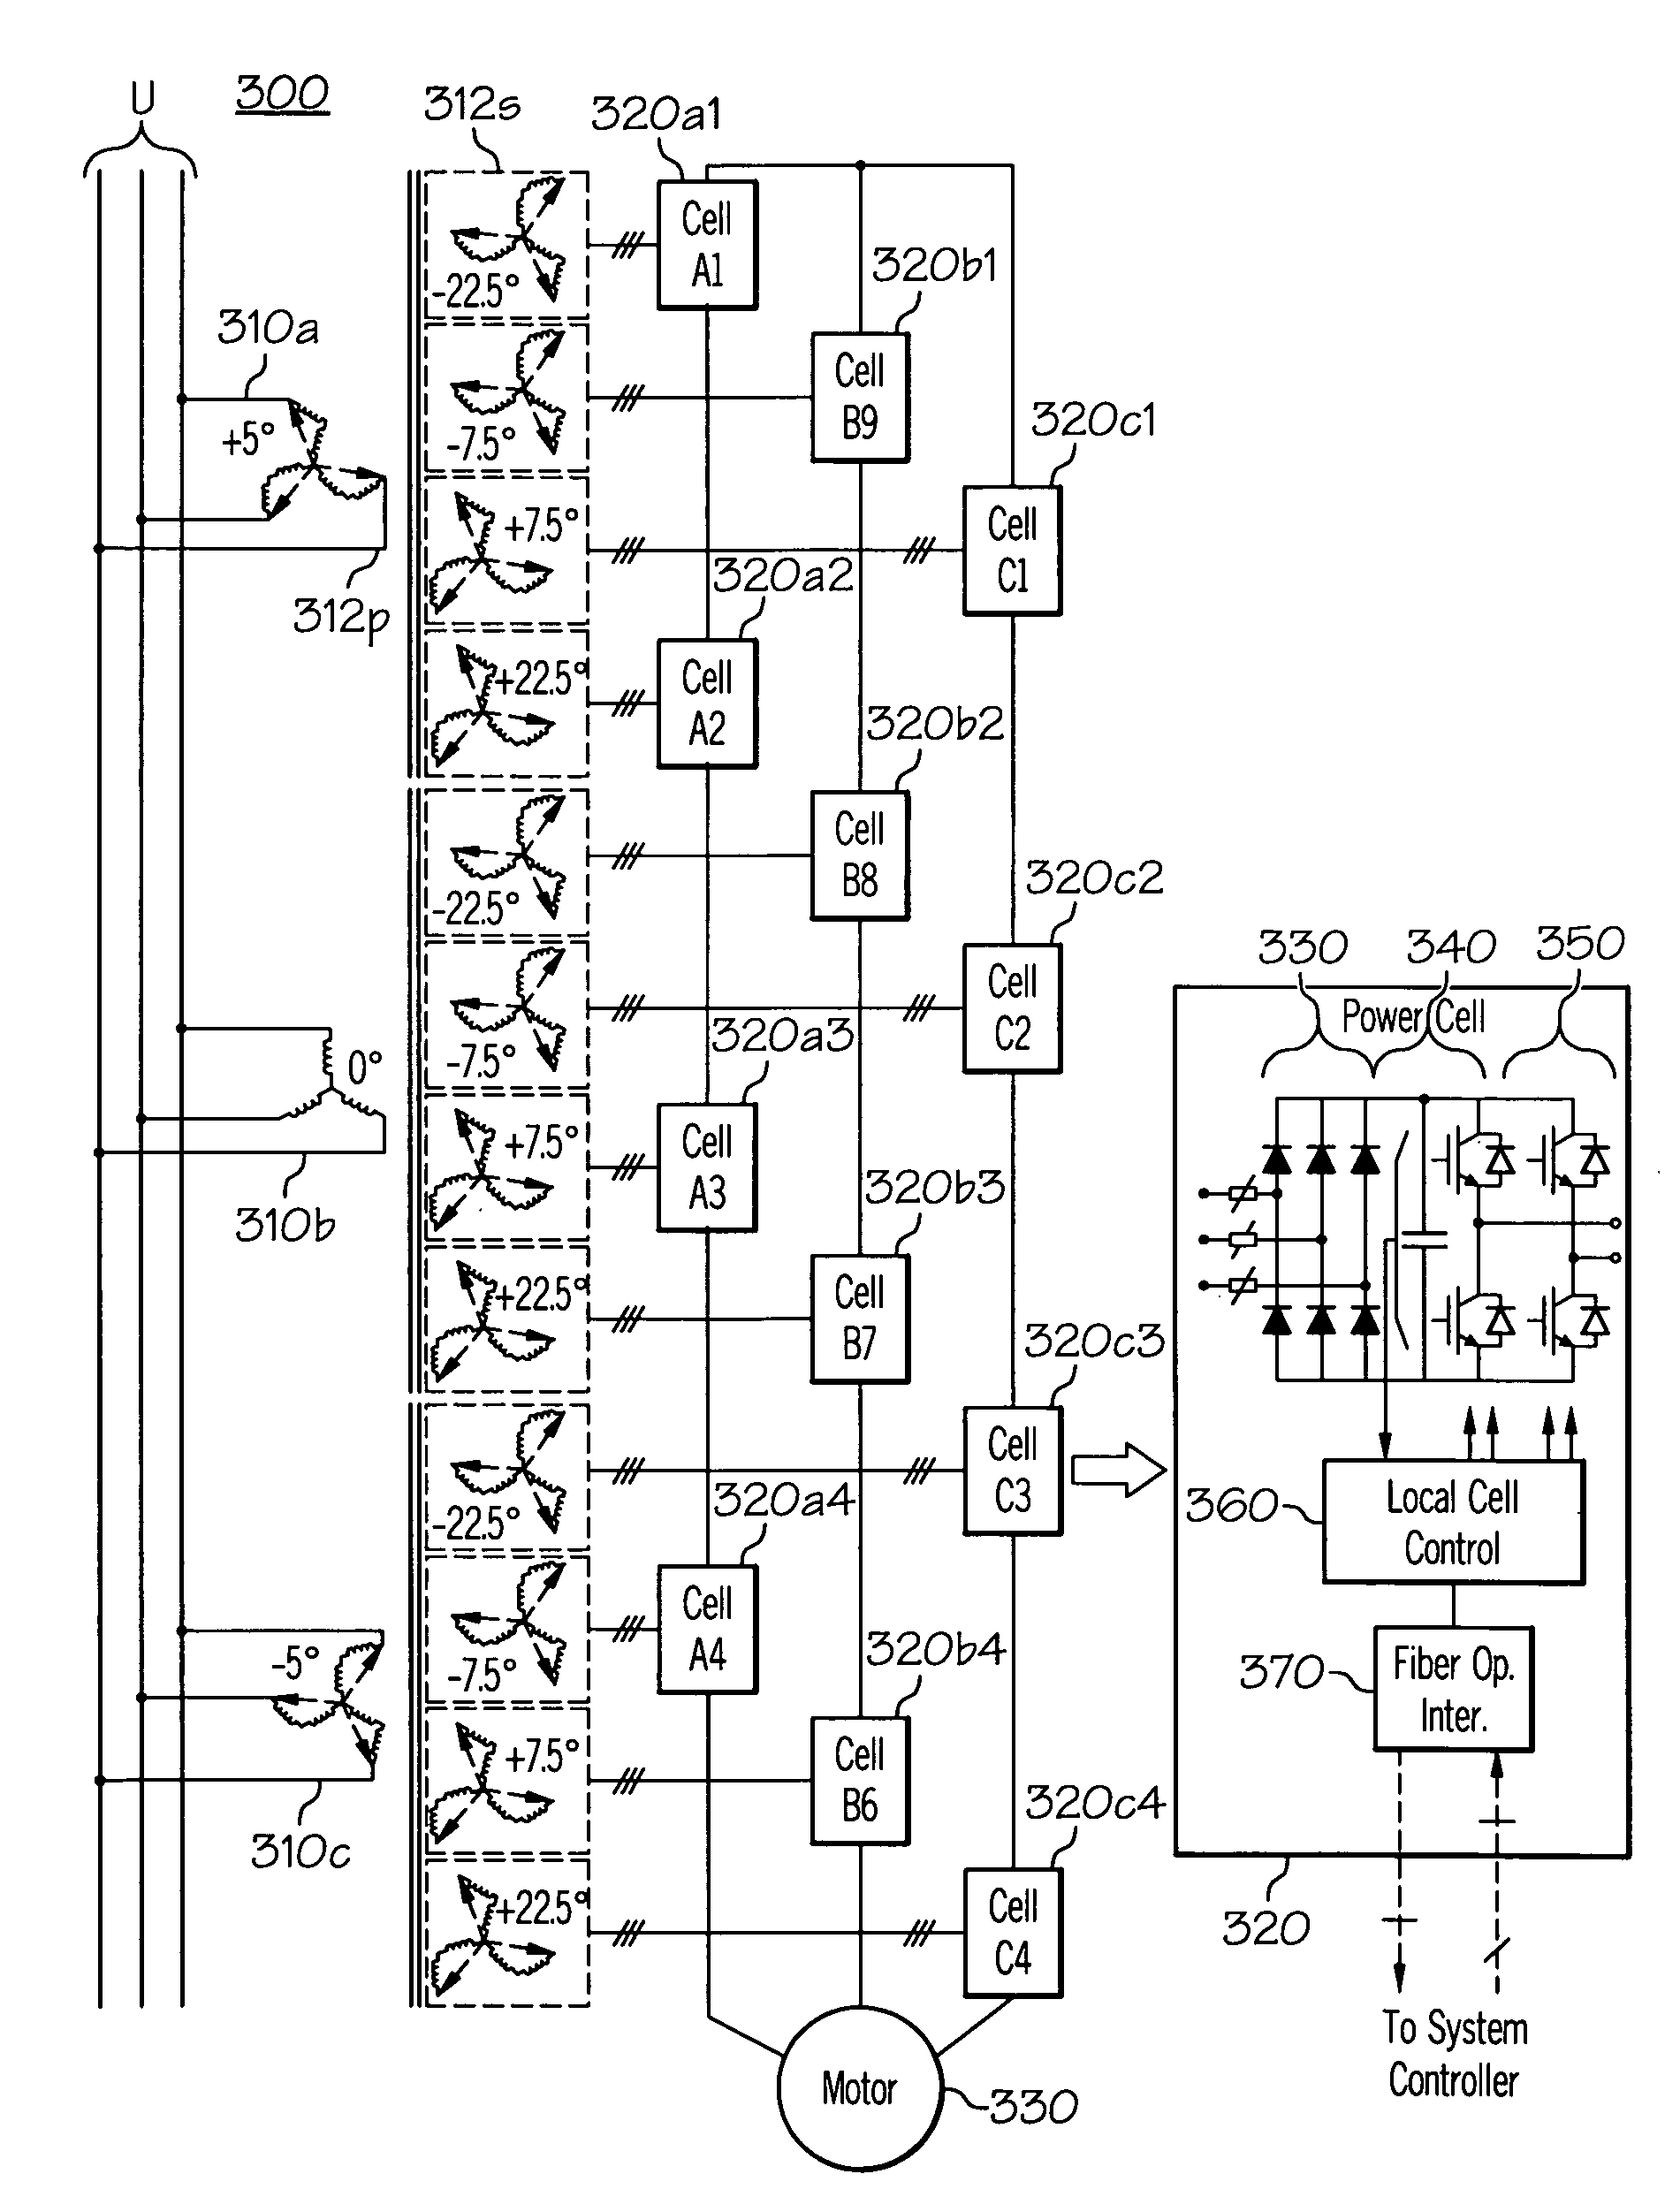 Modular multi-pulse transformer rectifier for use in symmetric multi-level power converter